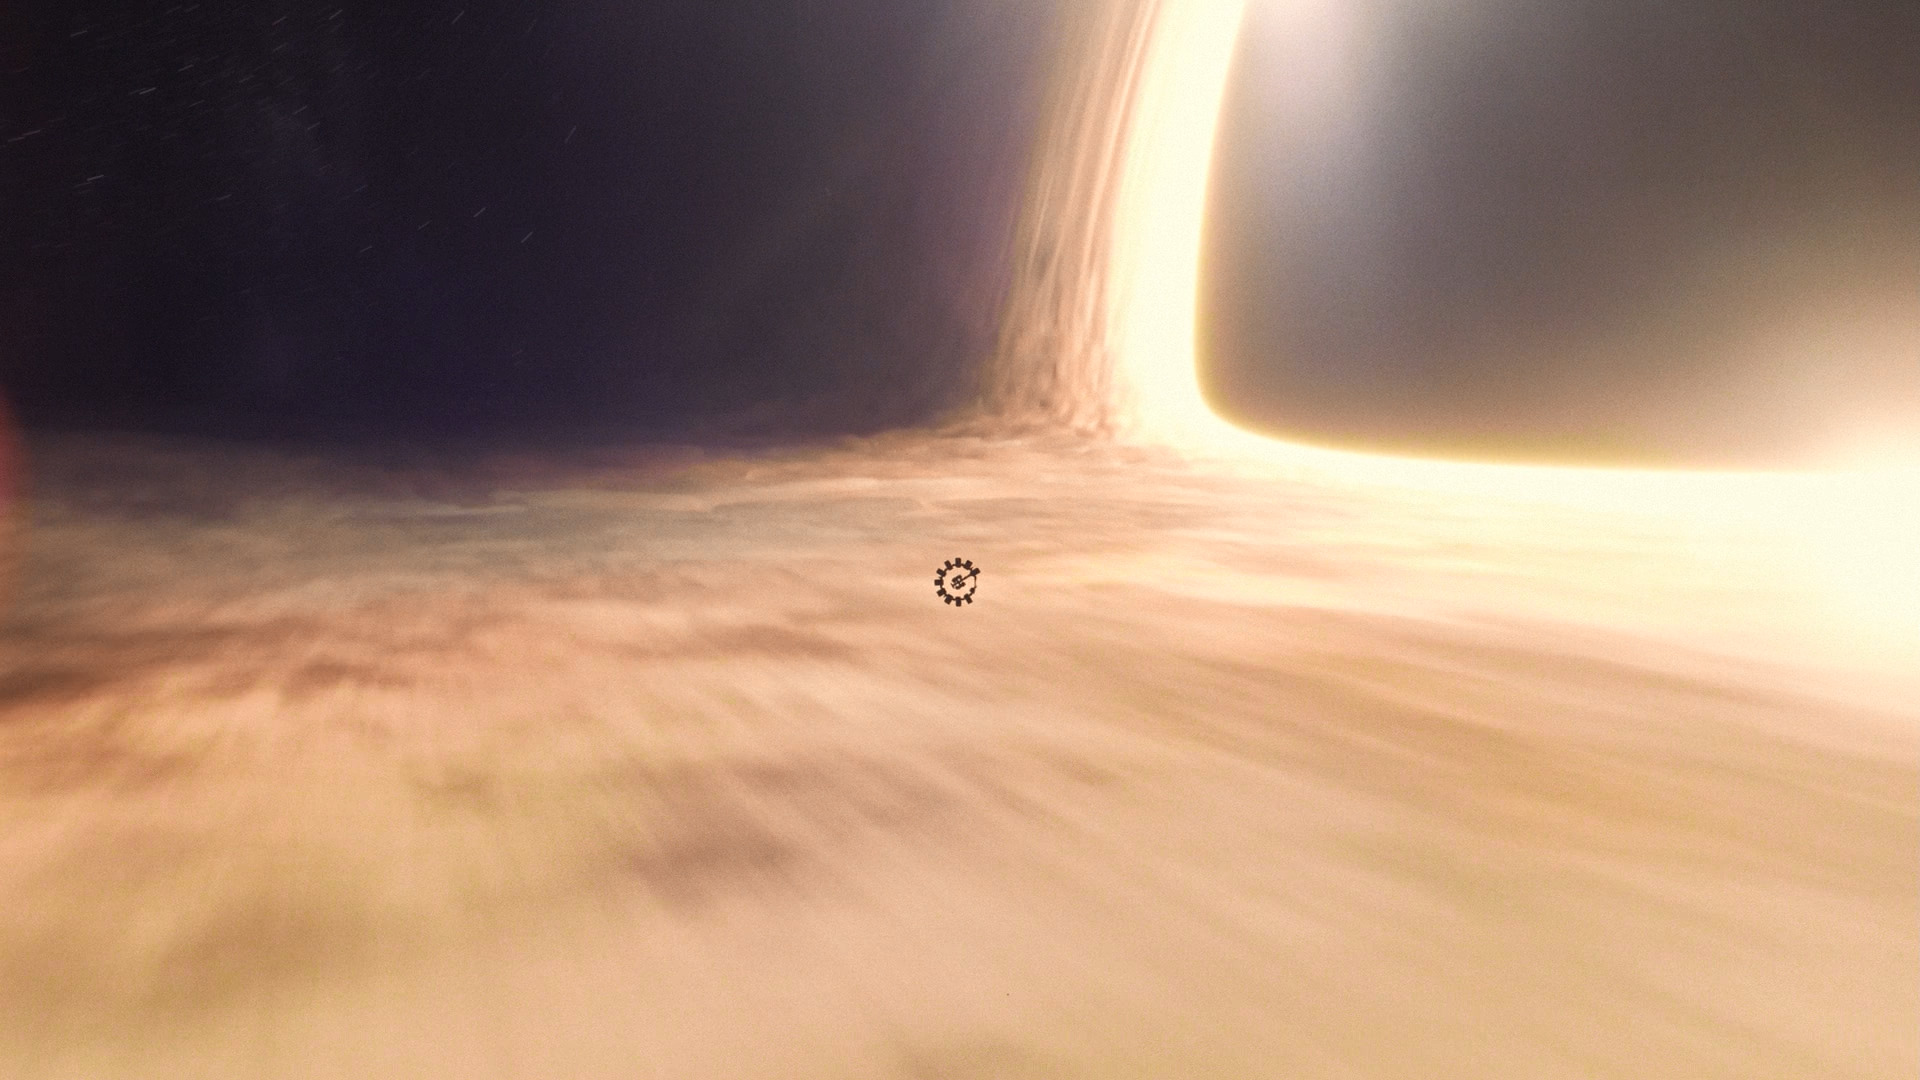 Interstellar (movie), Gargantua, Black Holes Wallpapers HD / Desktop and Mobile